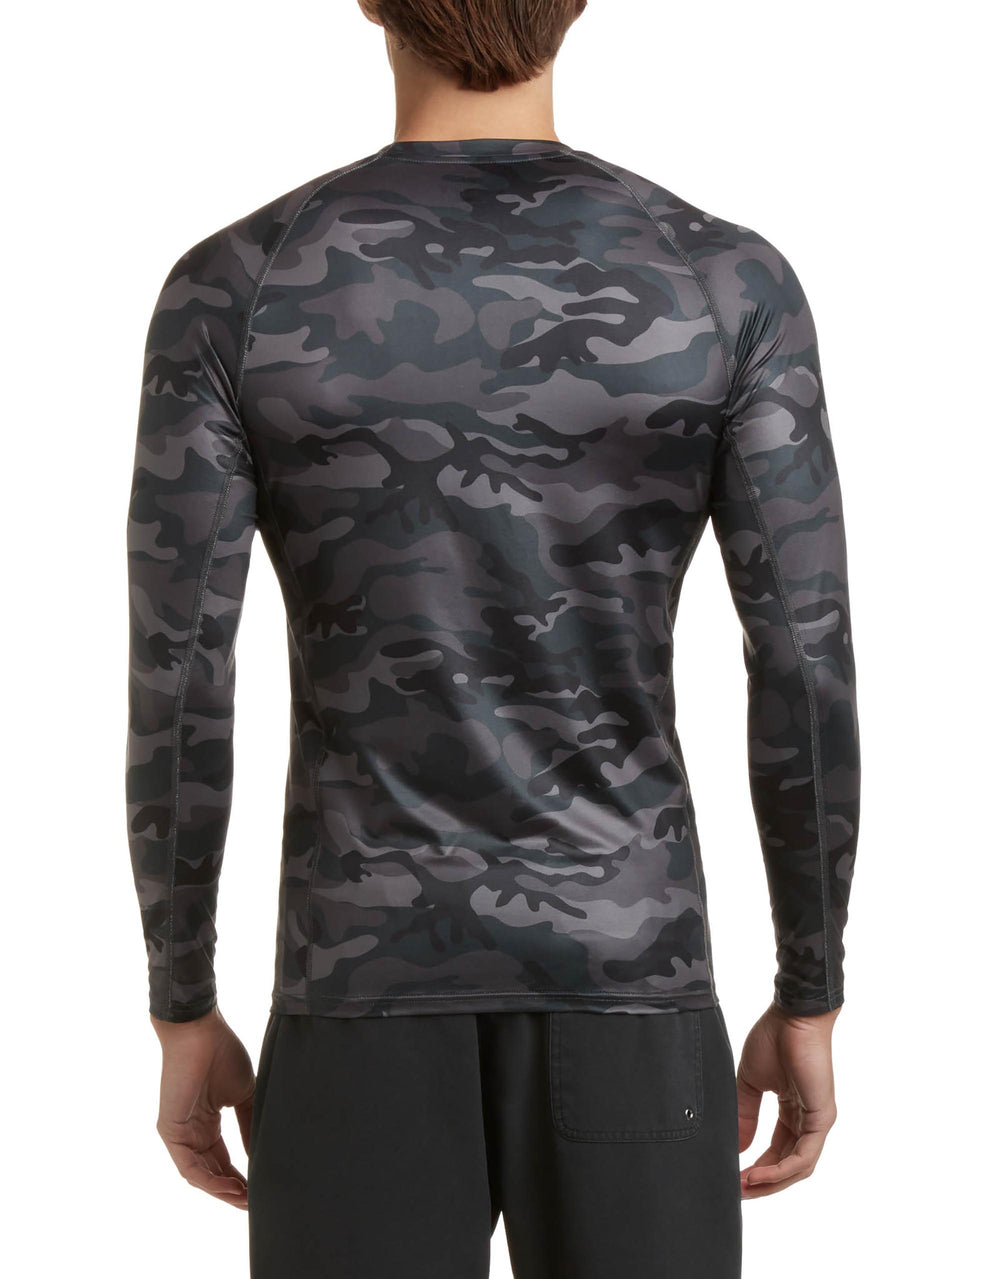 Kalo Organic Long Sleeve UPF 30 Shirt in Charcoal